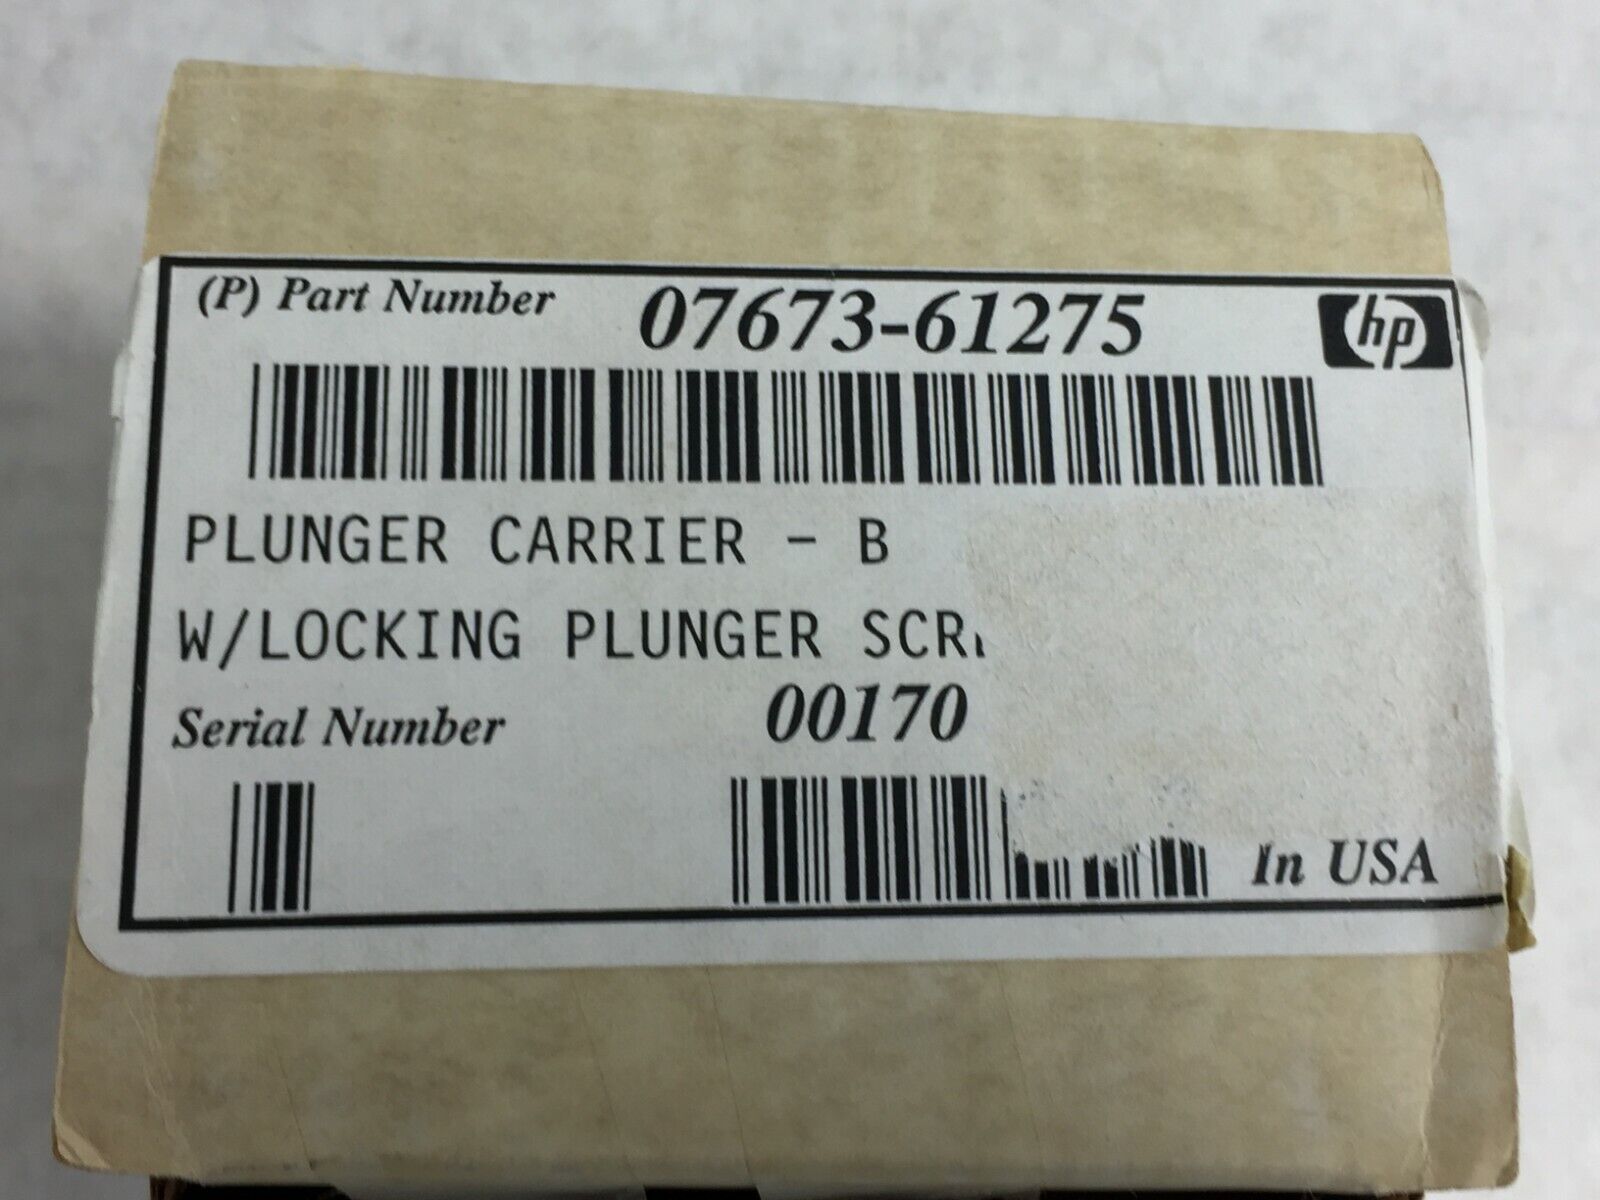 Agilent hp Plunger Carrier B w/Locking Plunger Screw 07673-61275 7673 Series NIB